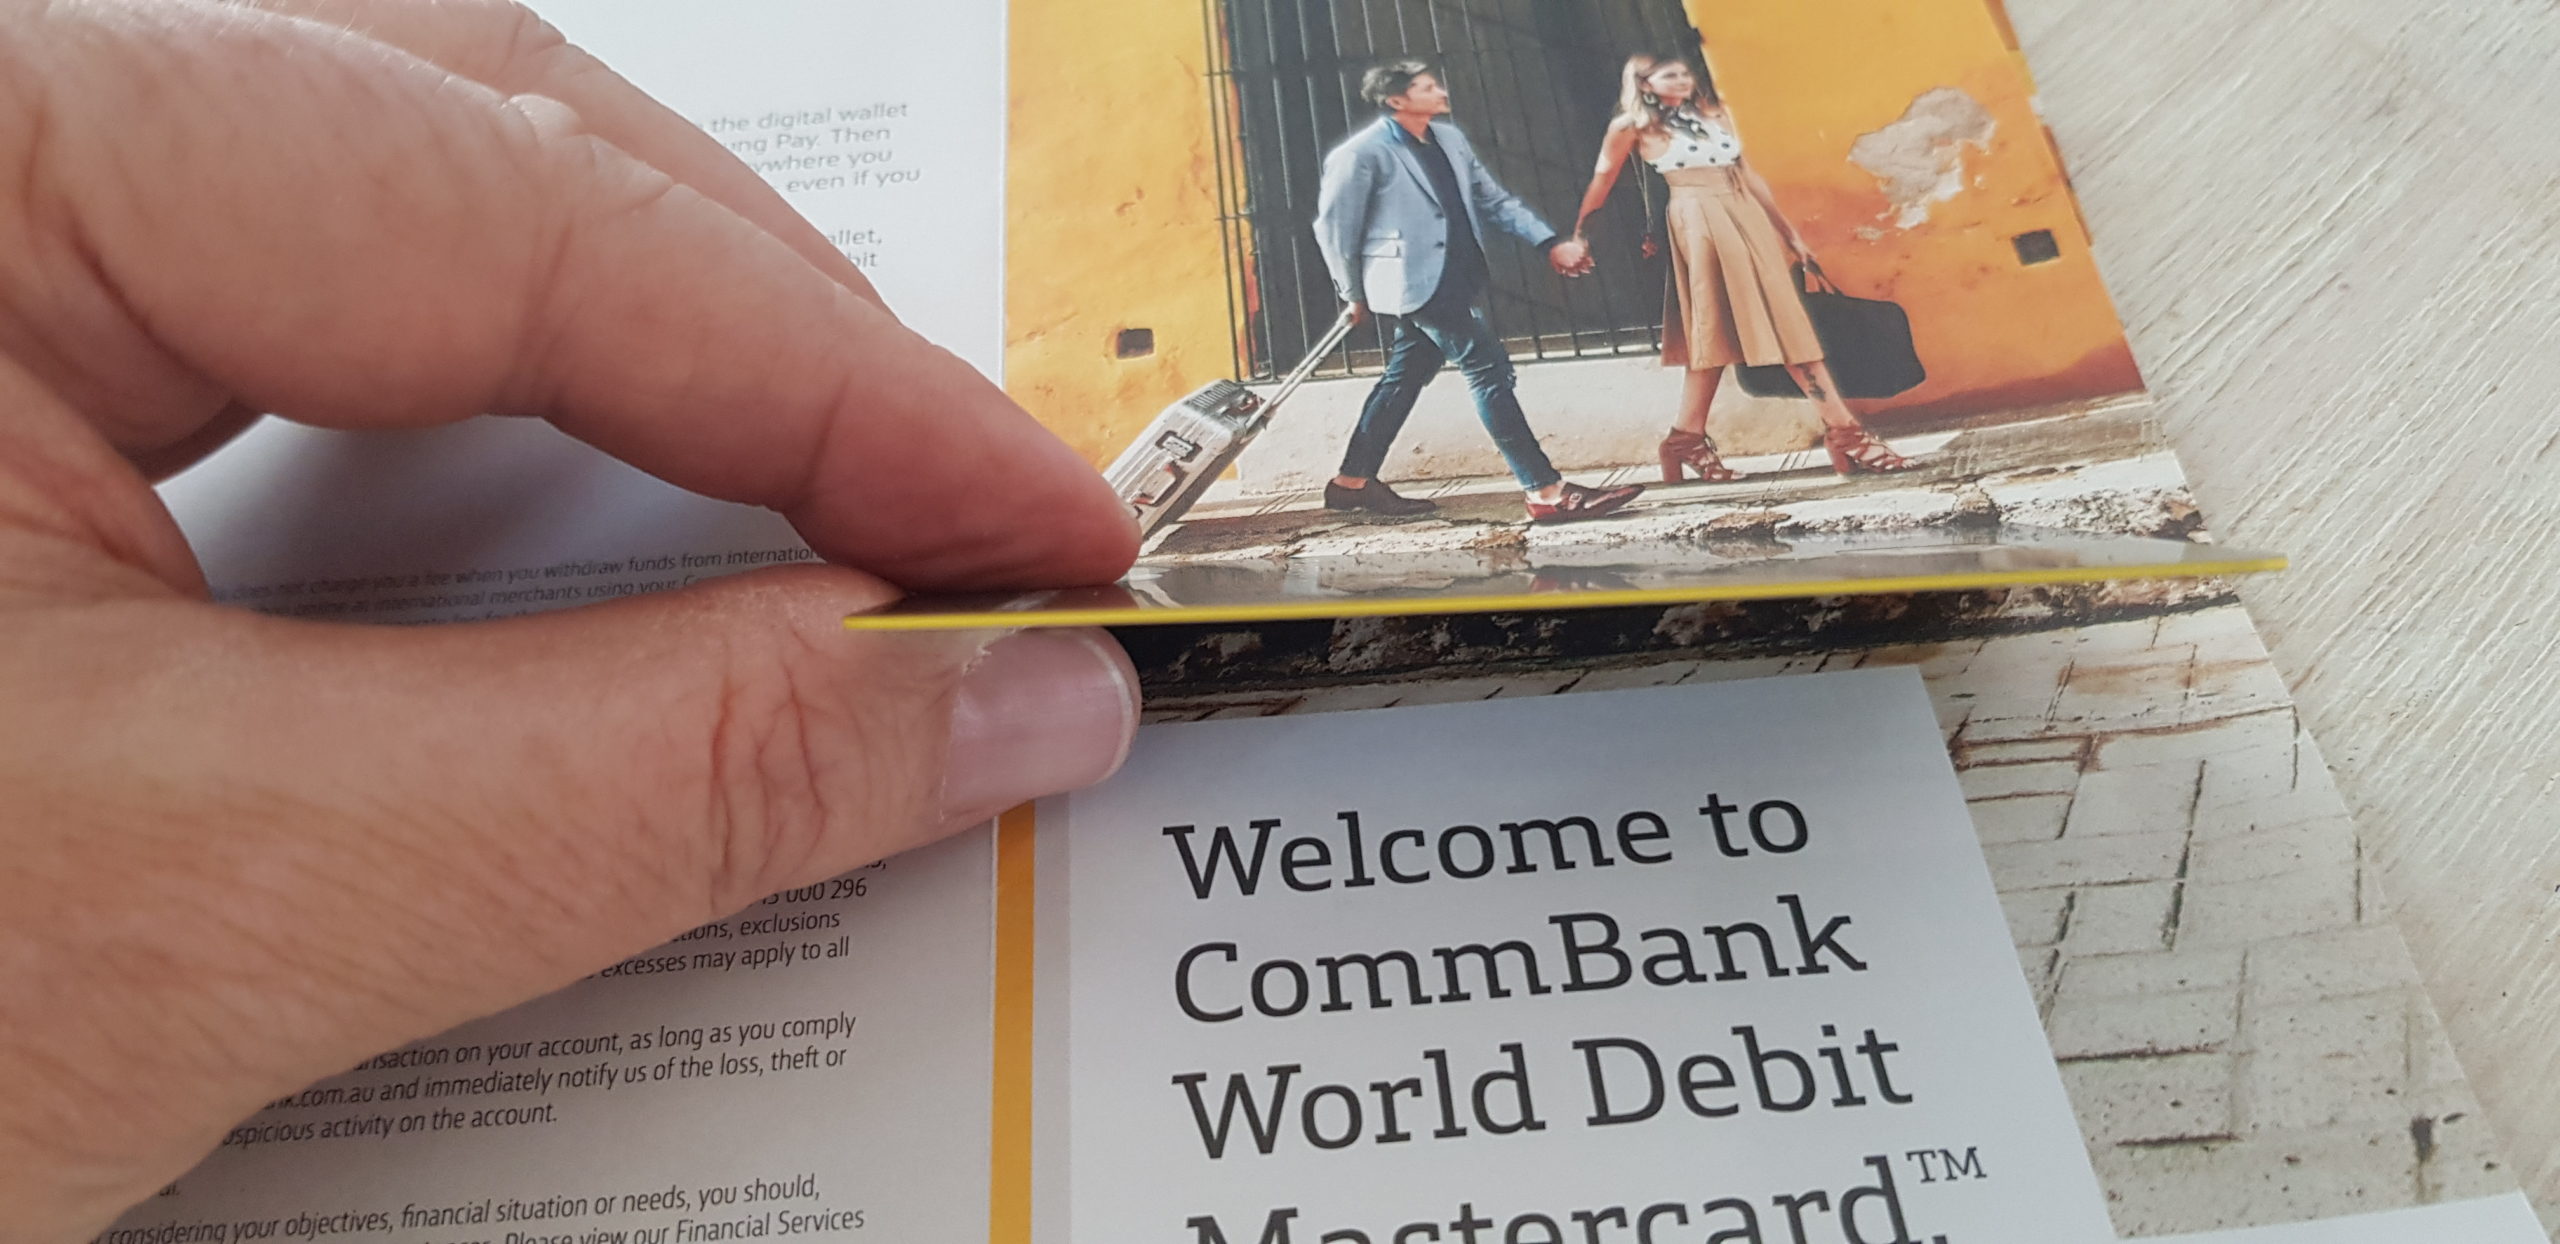 Commbank World Debit Mastercard Review